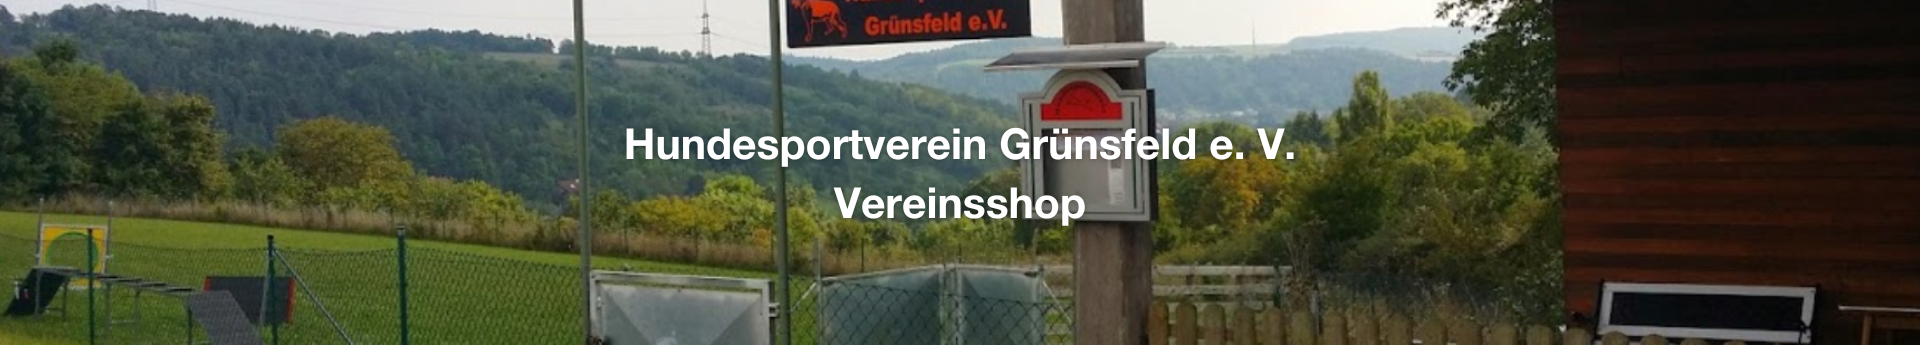 Hundesportverein Grünsfeld e. V. Title Image